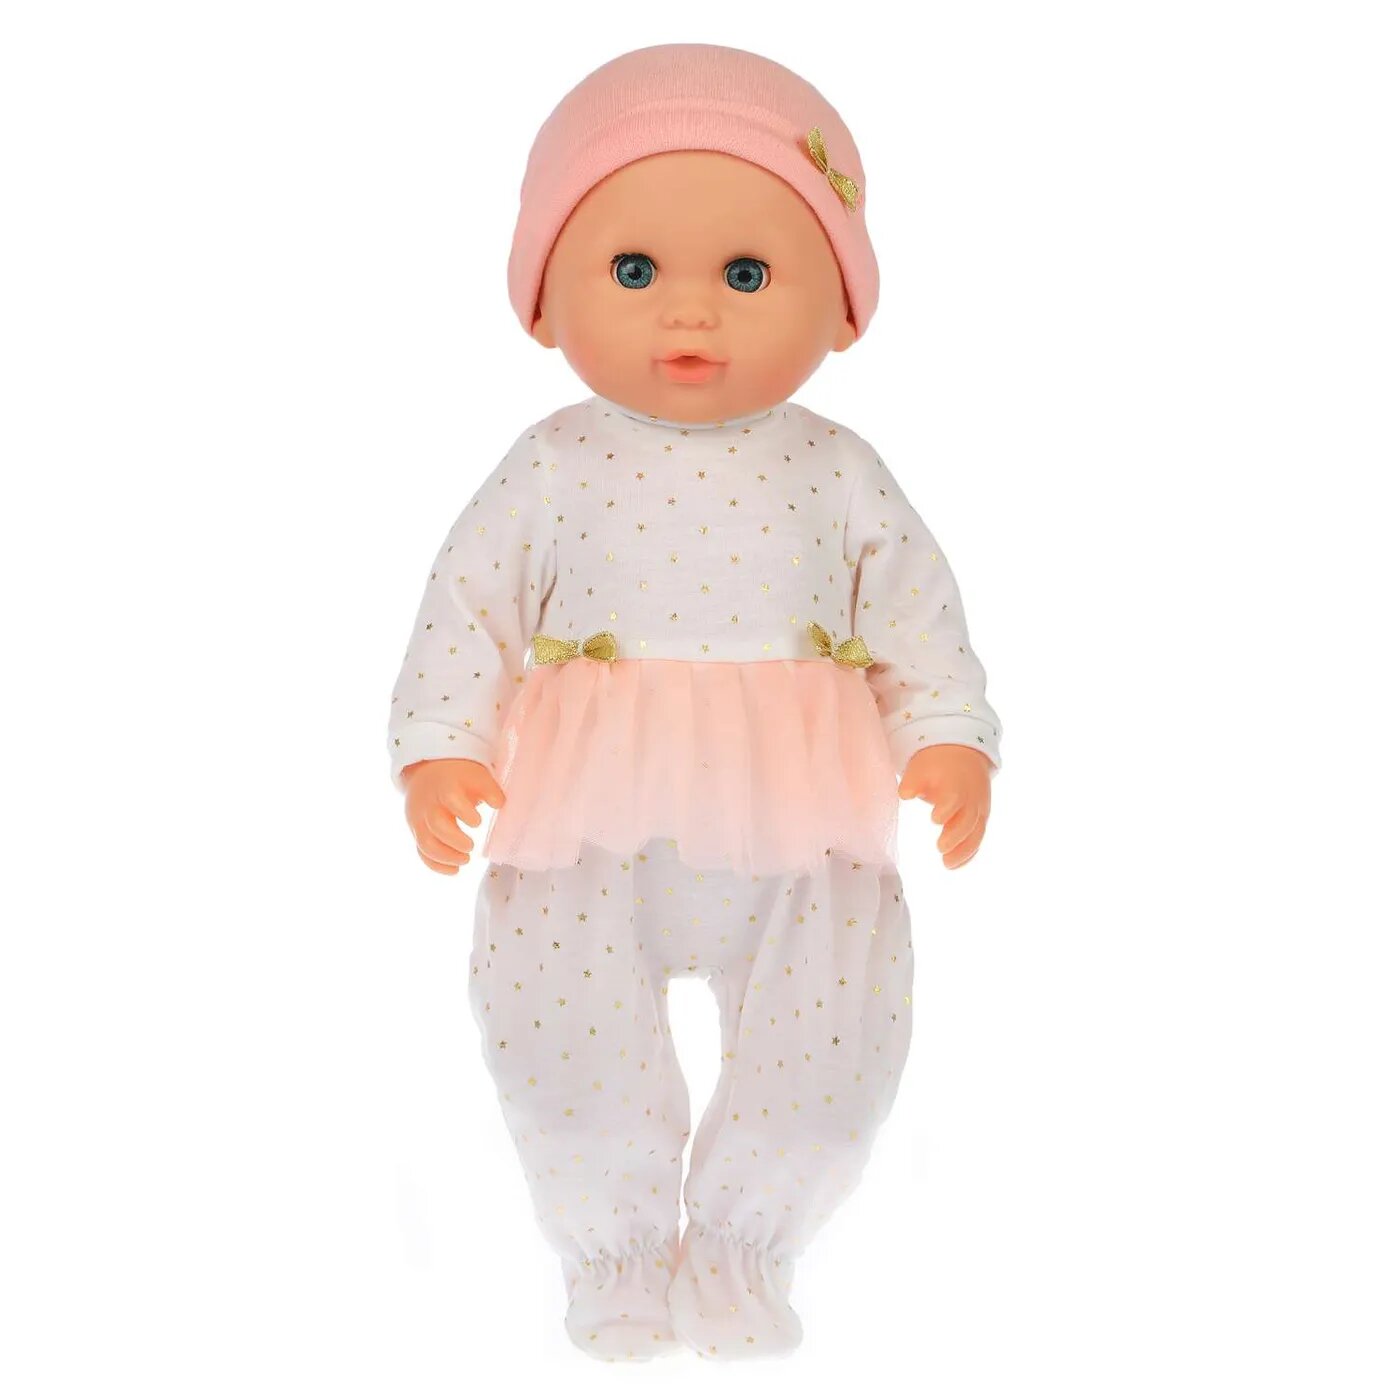 Одежда для кукол 38-43 см, комбинезон с шапочкой New Mary